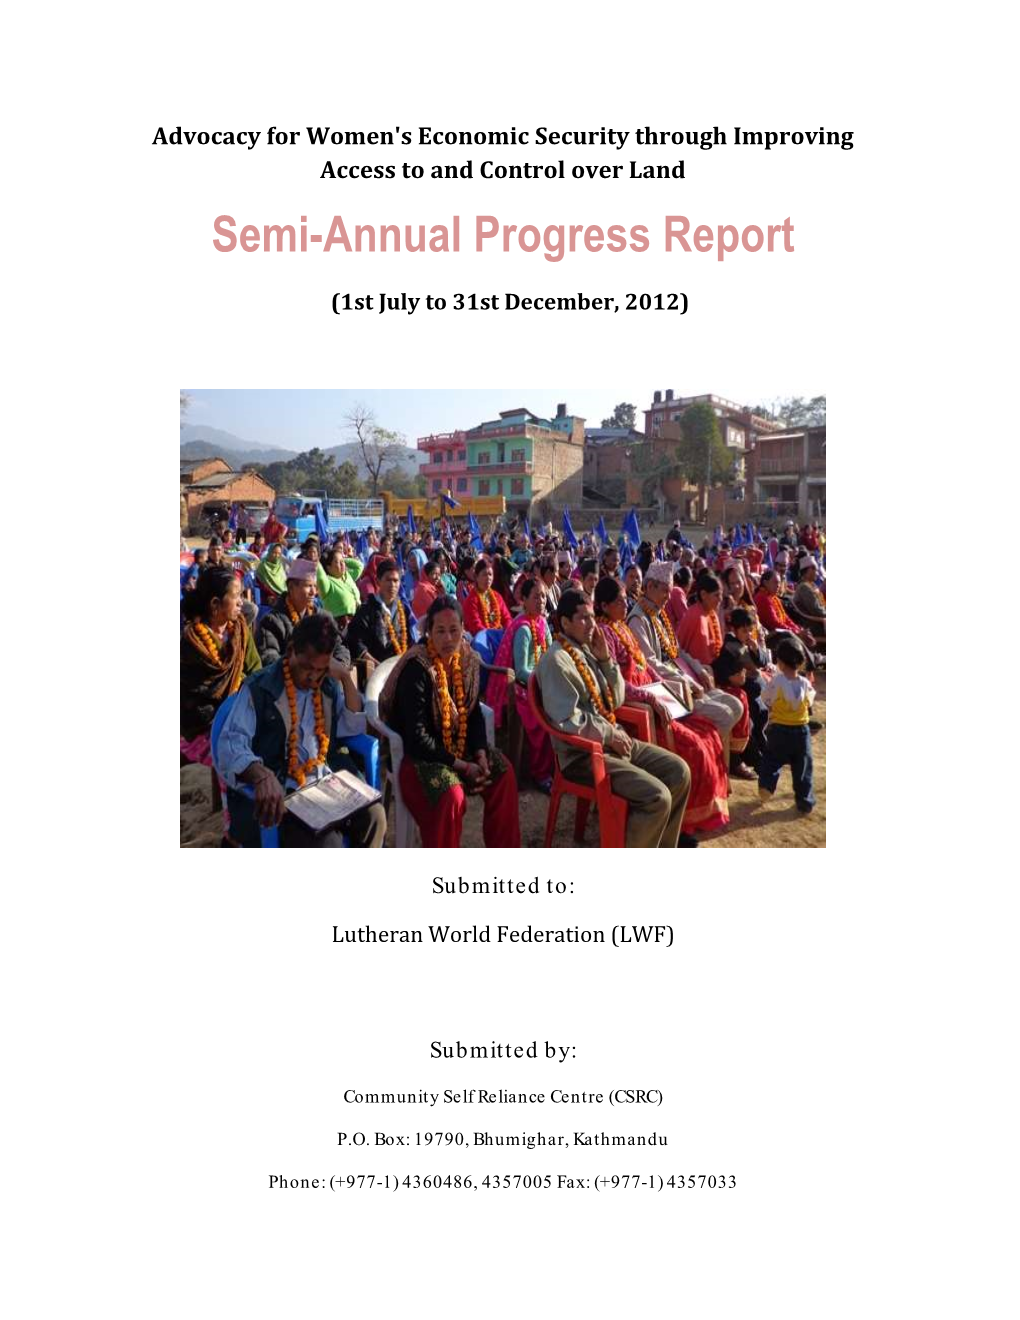 Semi-Annual Progress Report (1St July to 31St December, 2012)